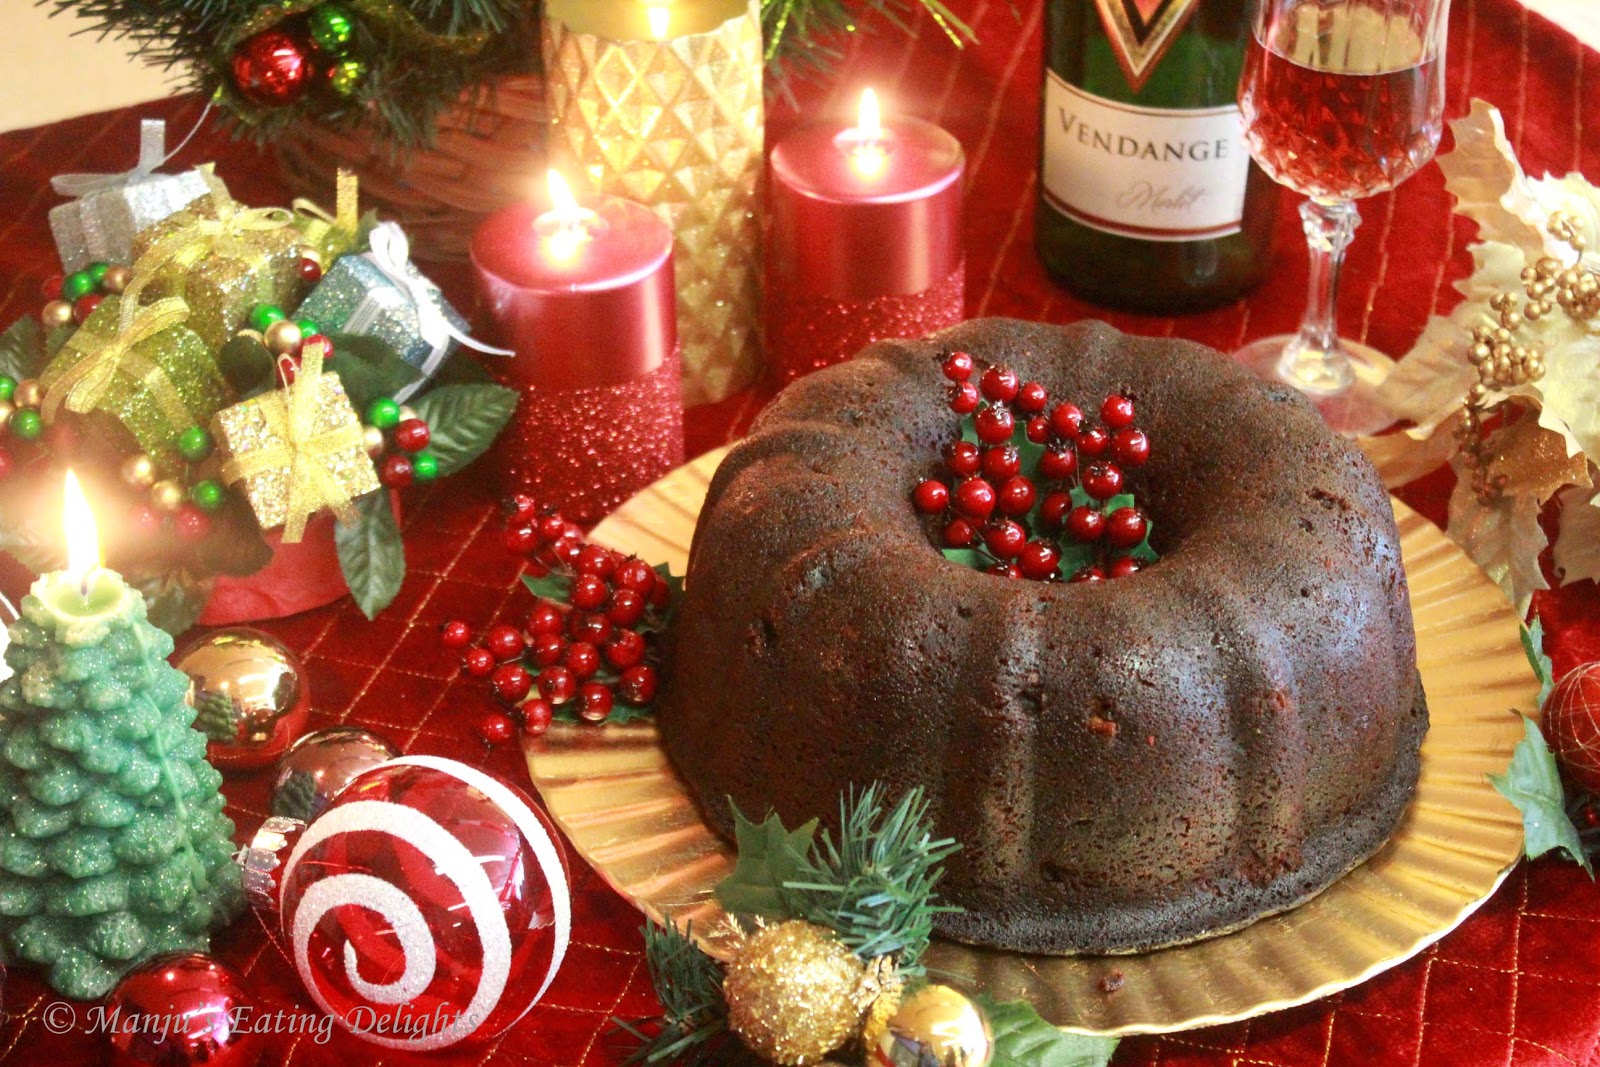 Manju's Eating Delights: Traditional Christmas Fruit Cake 